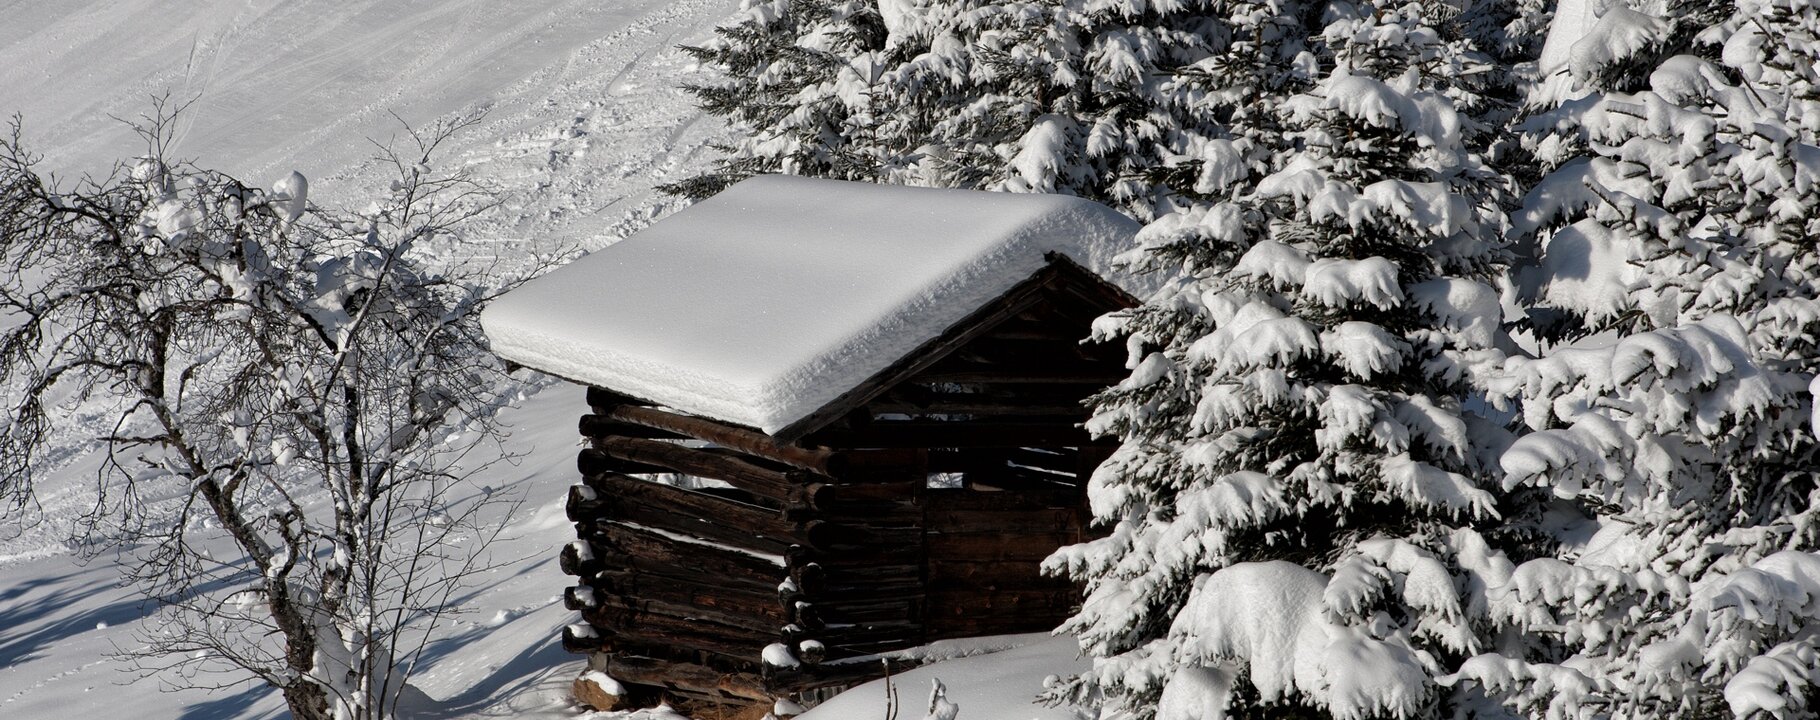 hided hay barn in the wintry wood | © Serfaus-Fiss-Ladis/Tirol